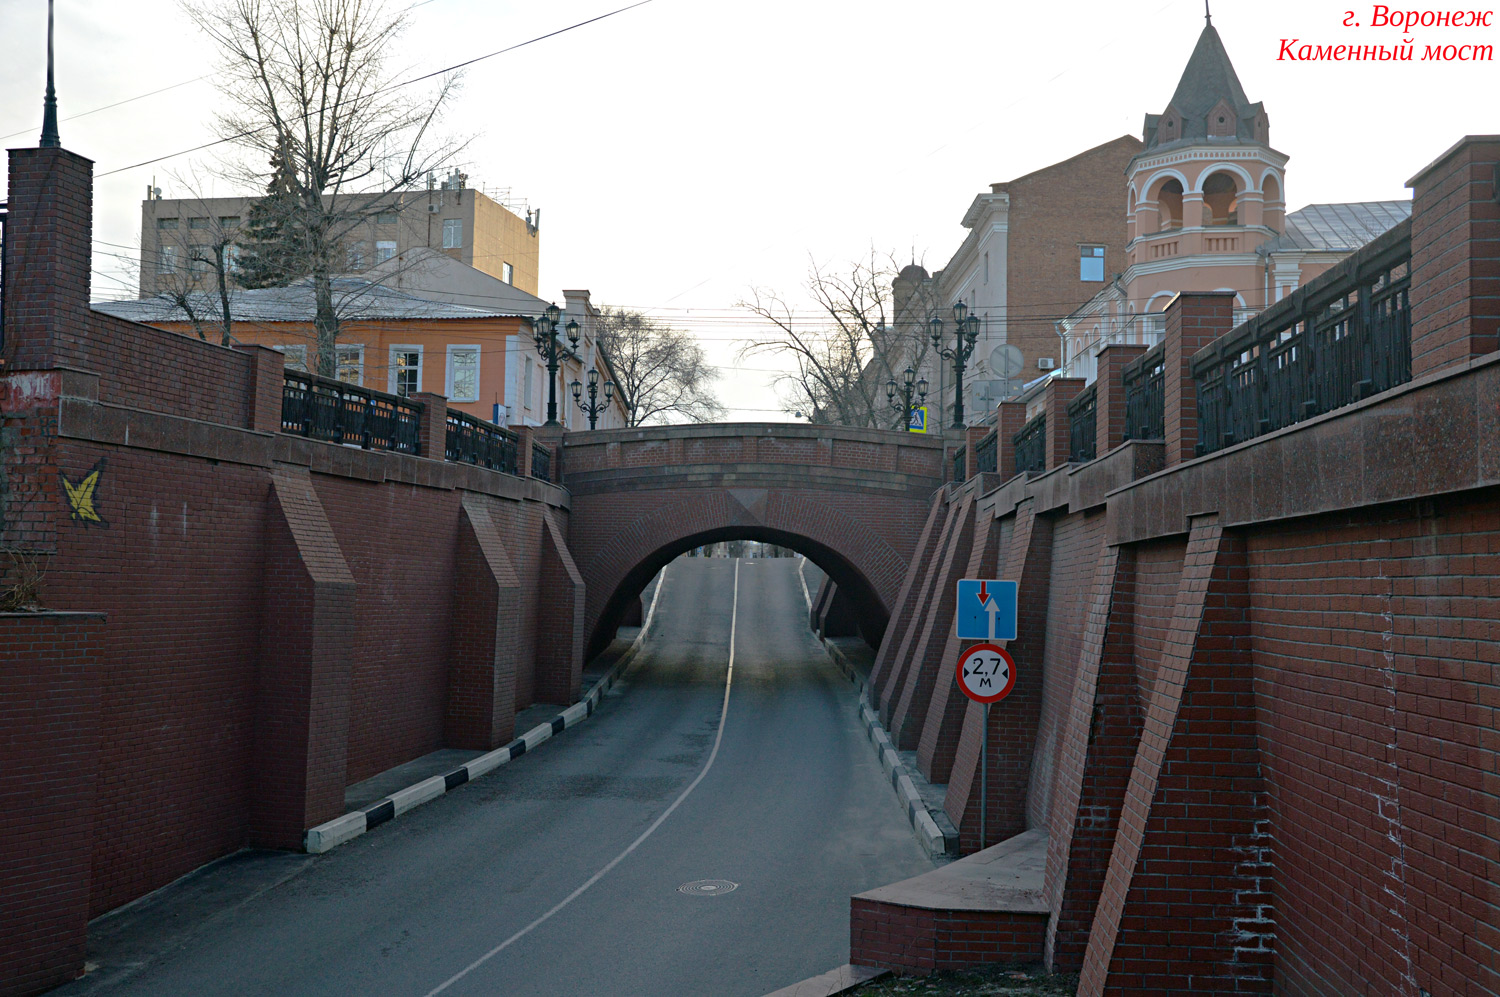 Woroneż, Каменный мост